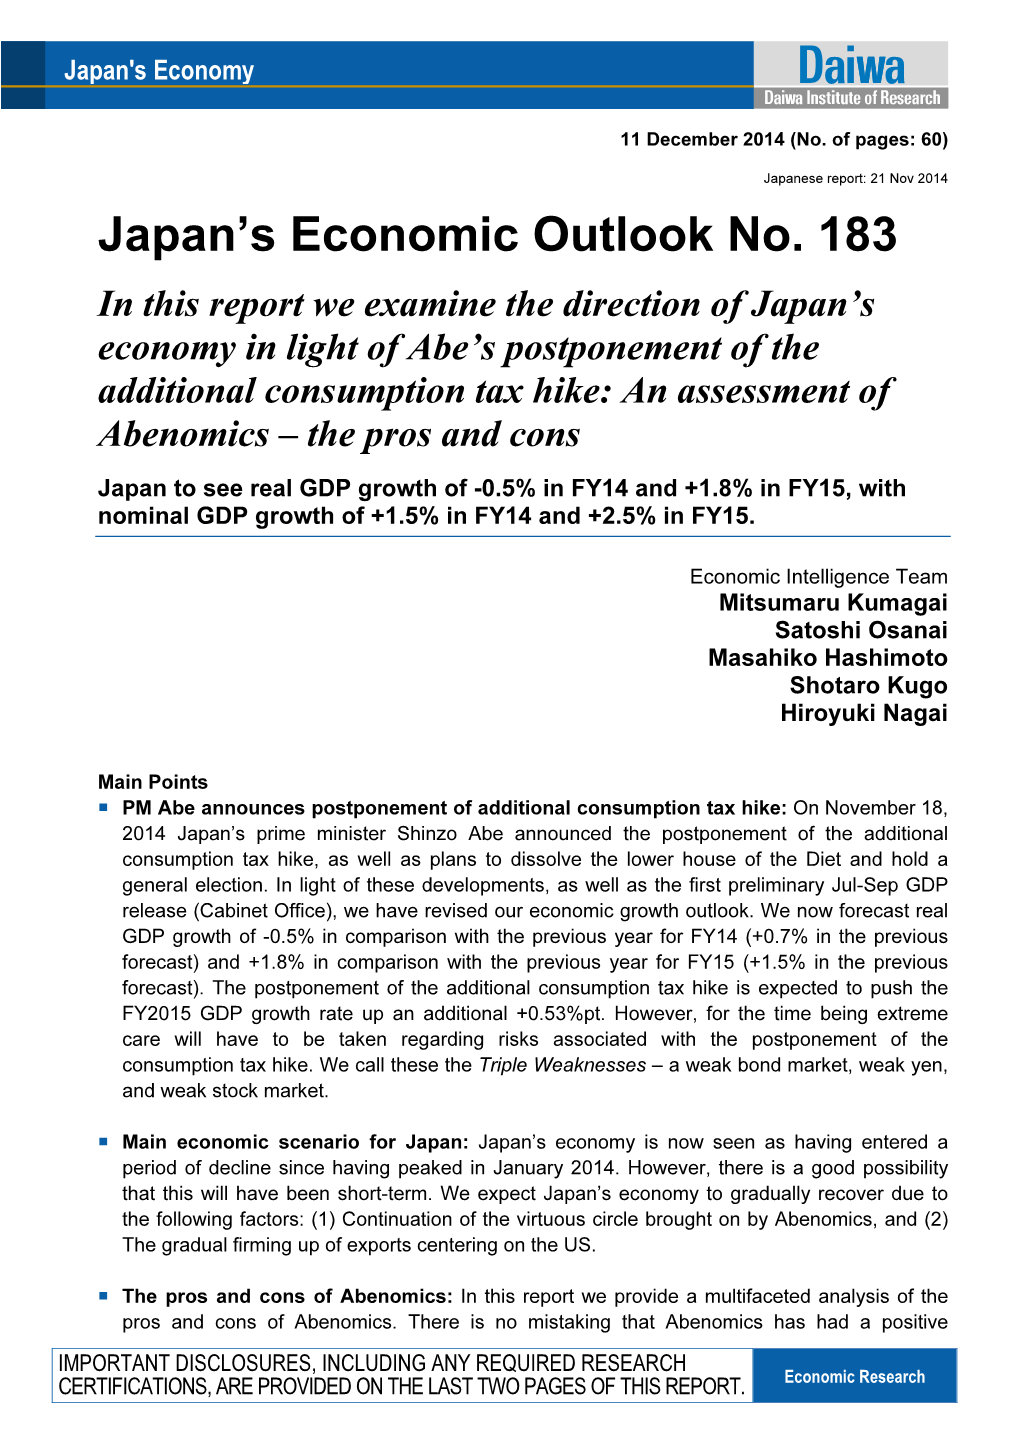 Japan's Economic Outlook No. 183